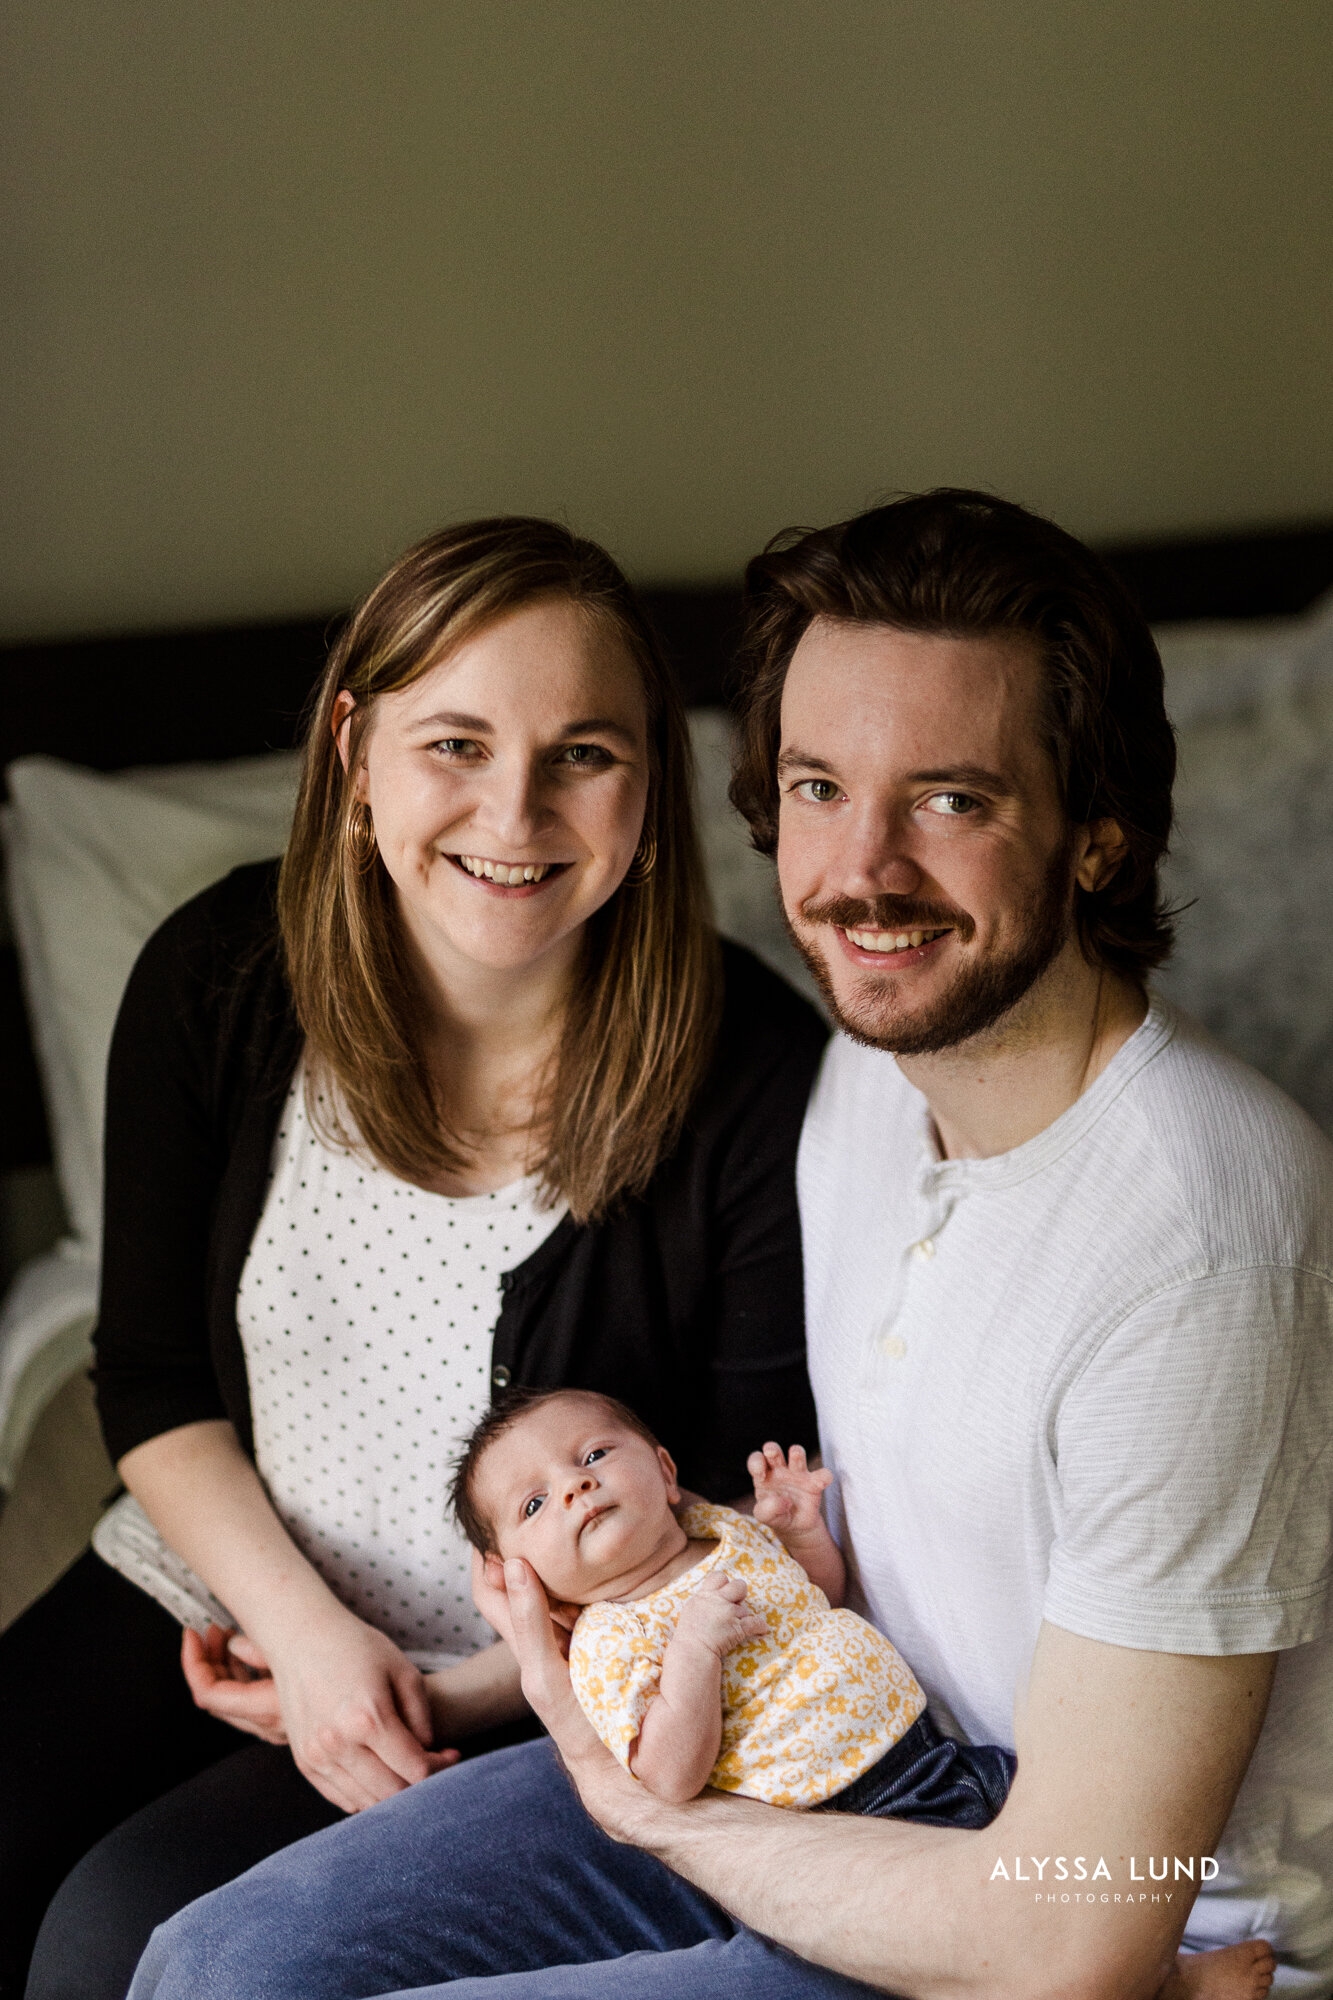 Minnesota storytelling lifestyle newborn photography at home-13.jpg